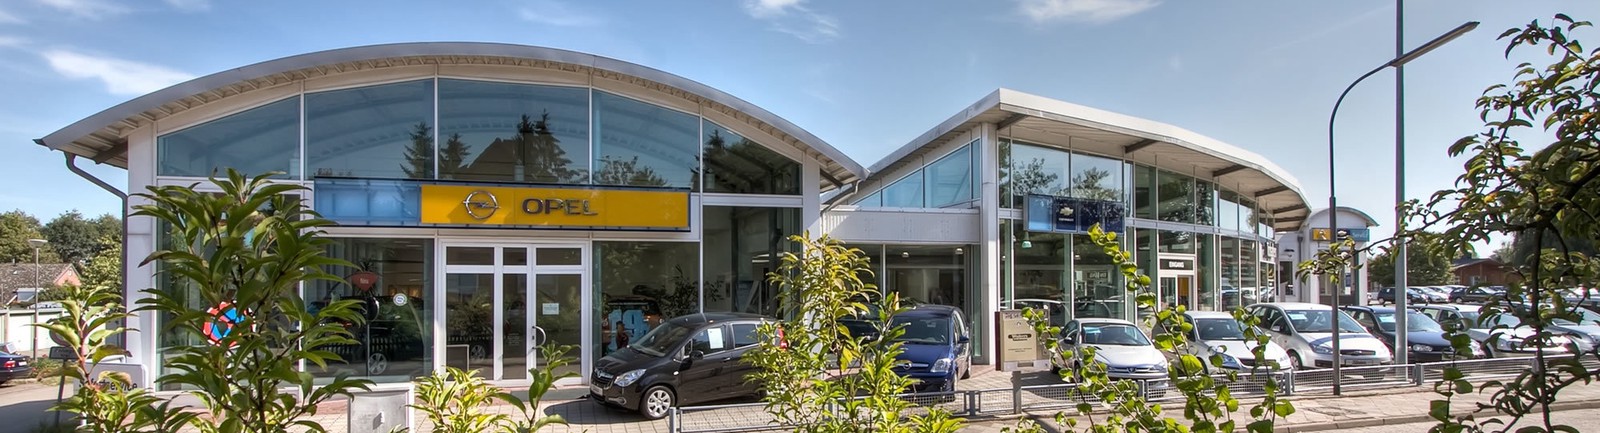 News und Events  Autohaus Tobaben GmbH & Co. KG Buxtehude